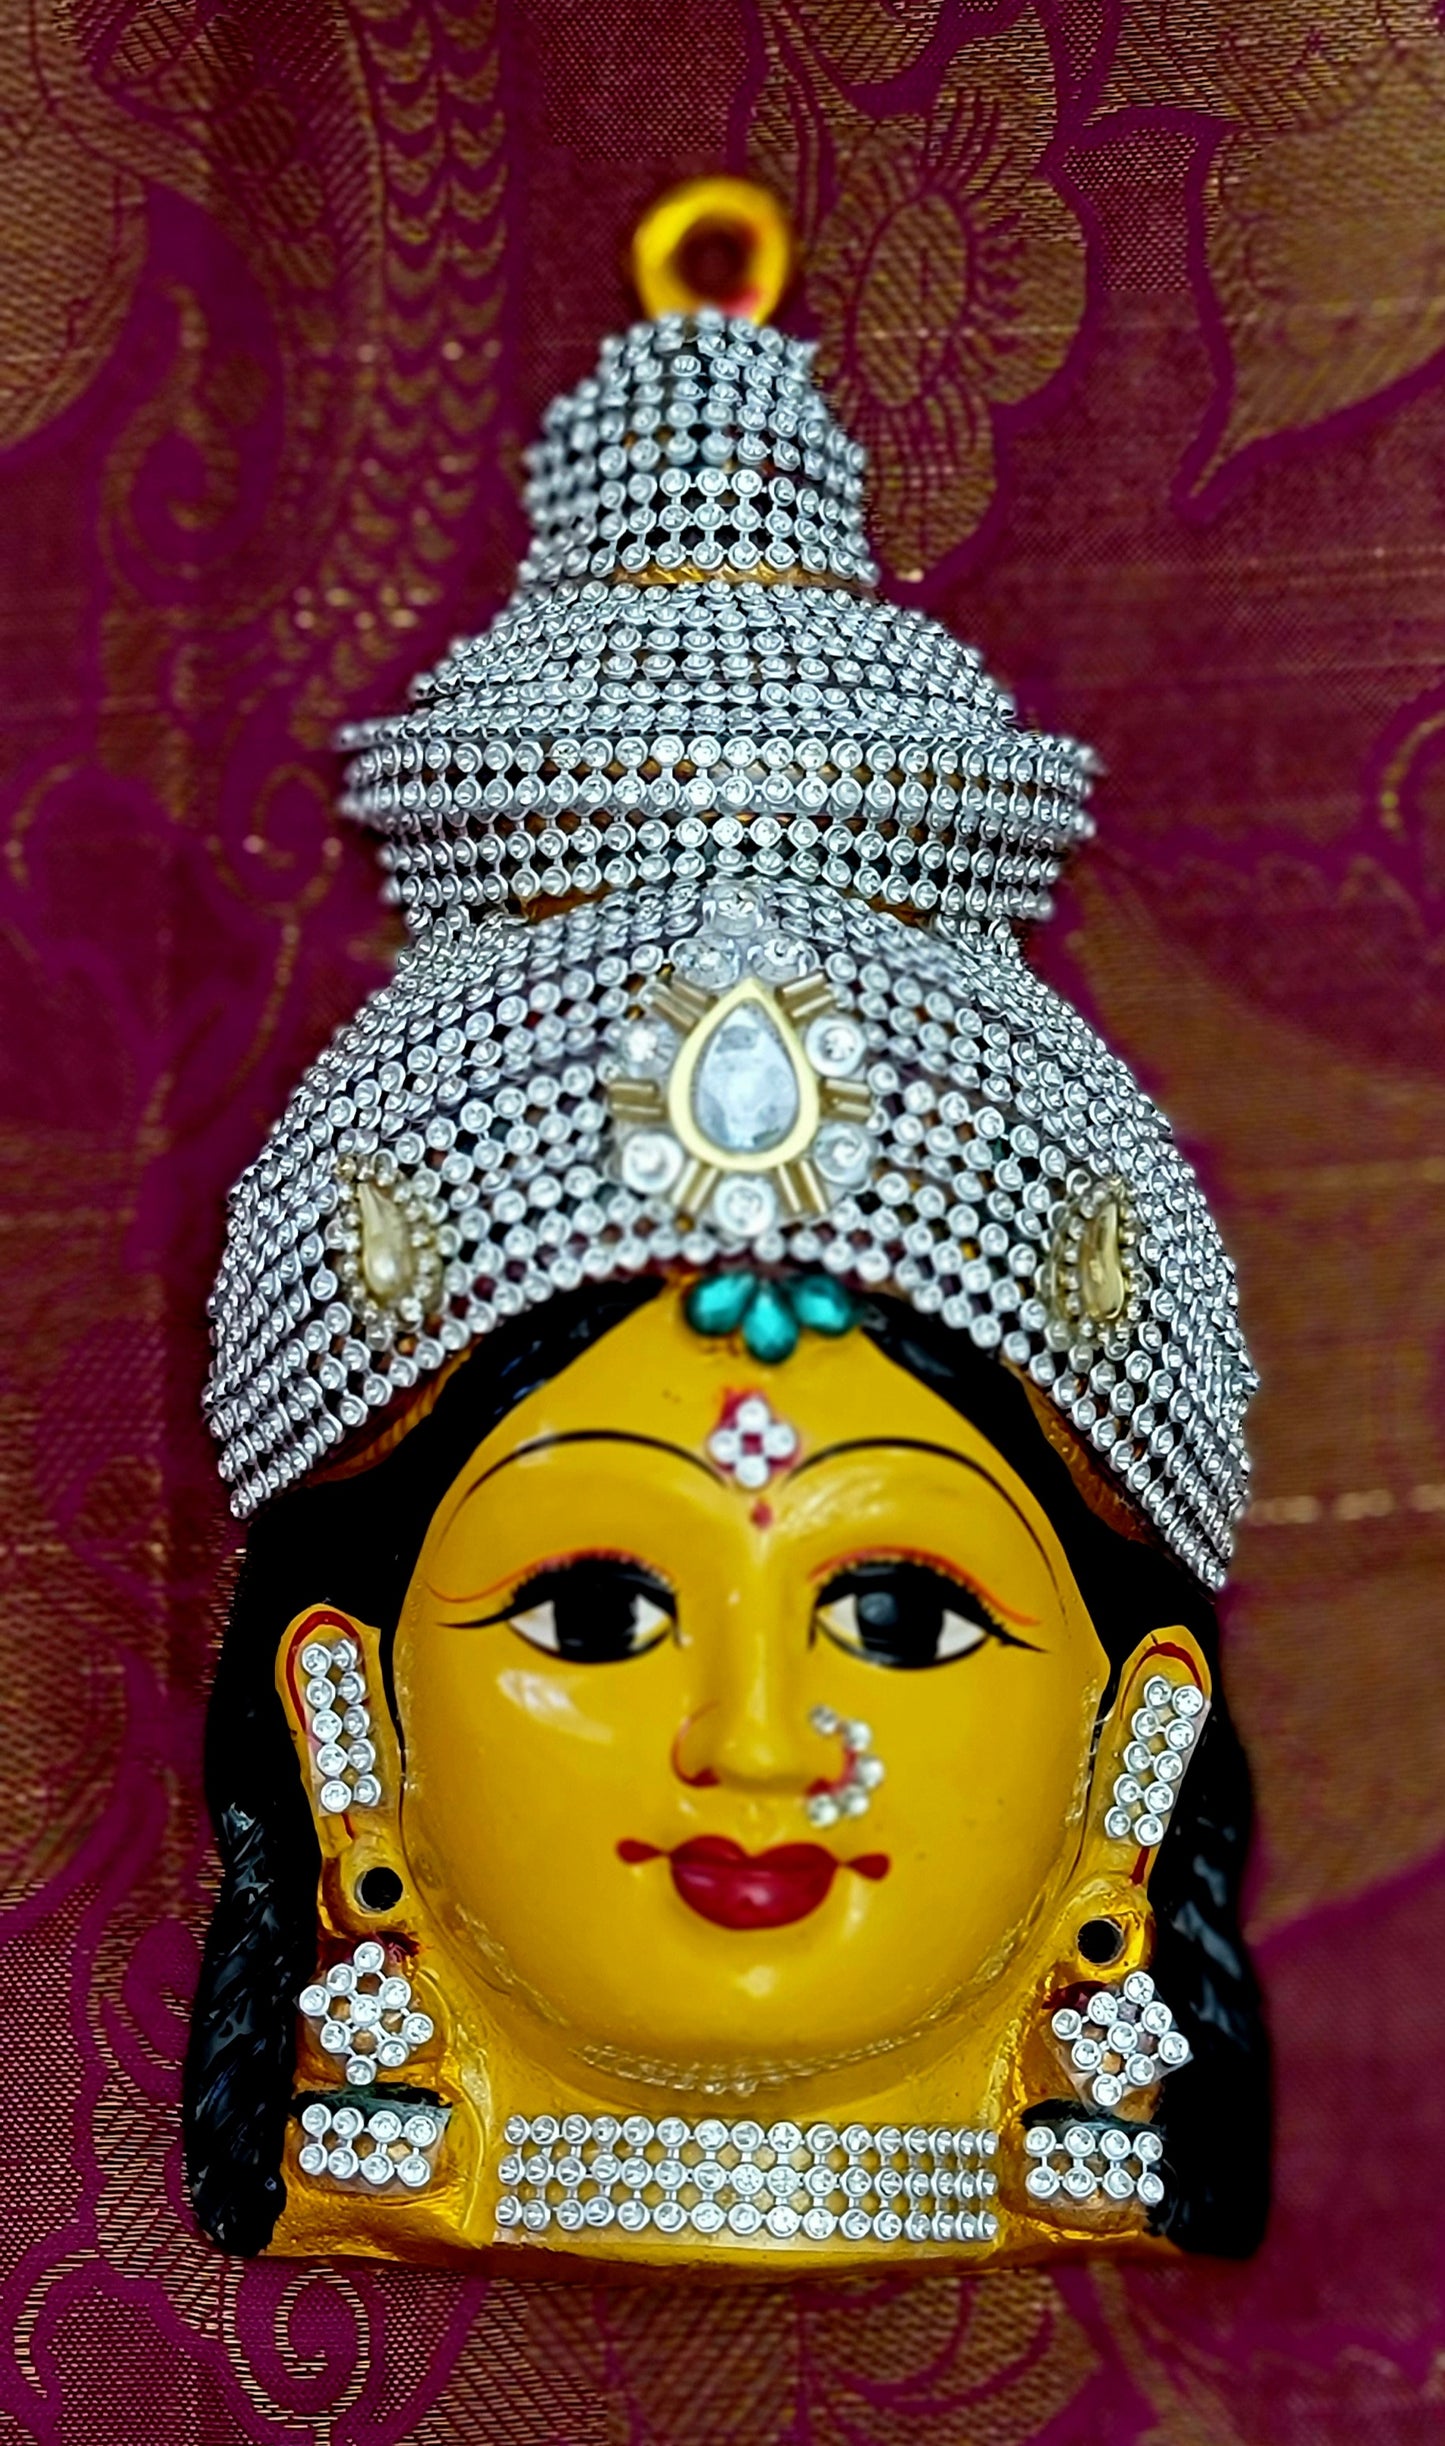 Ammavaru Faces for Varalakshmi Pooja